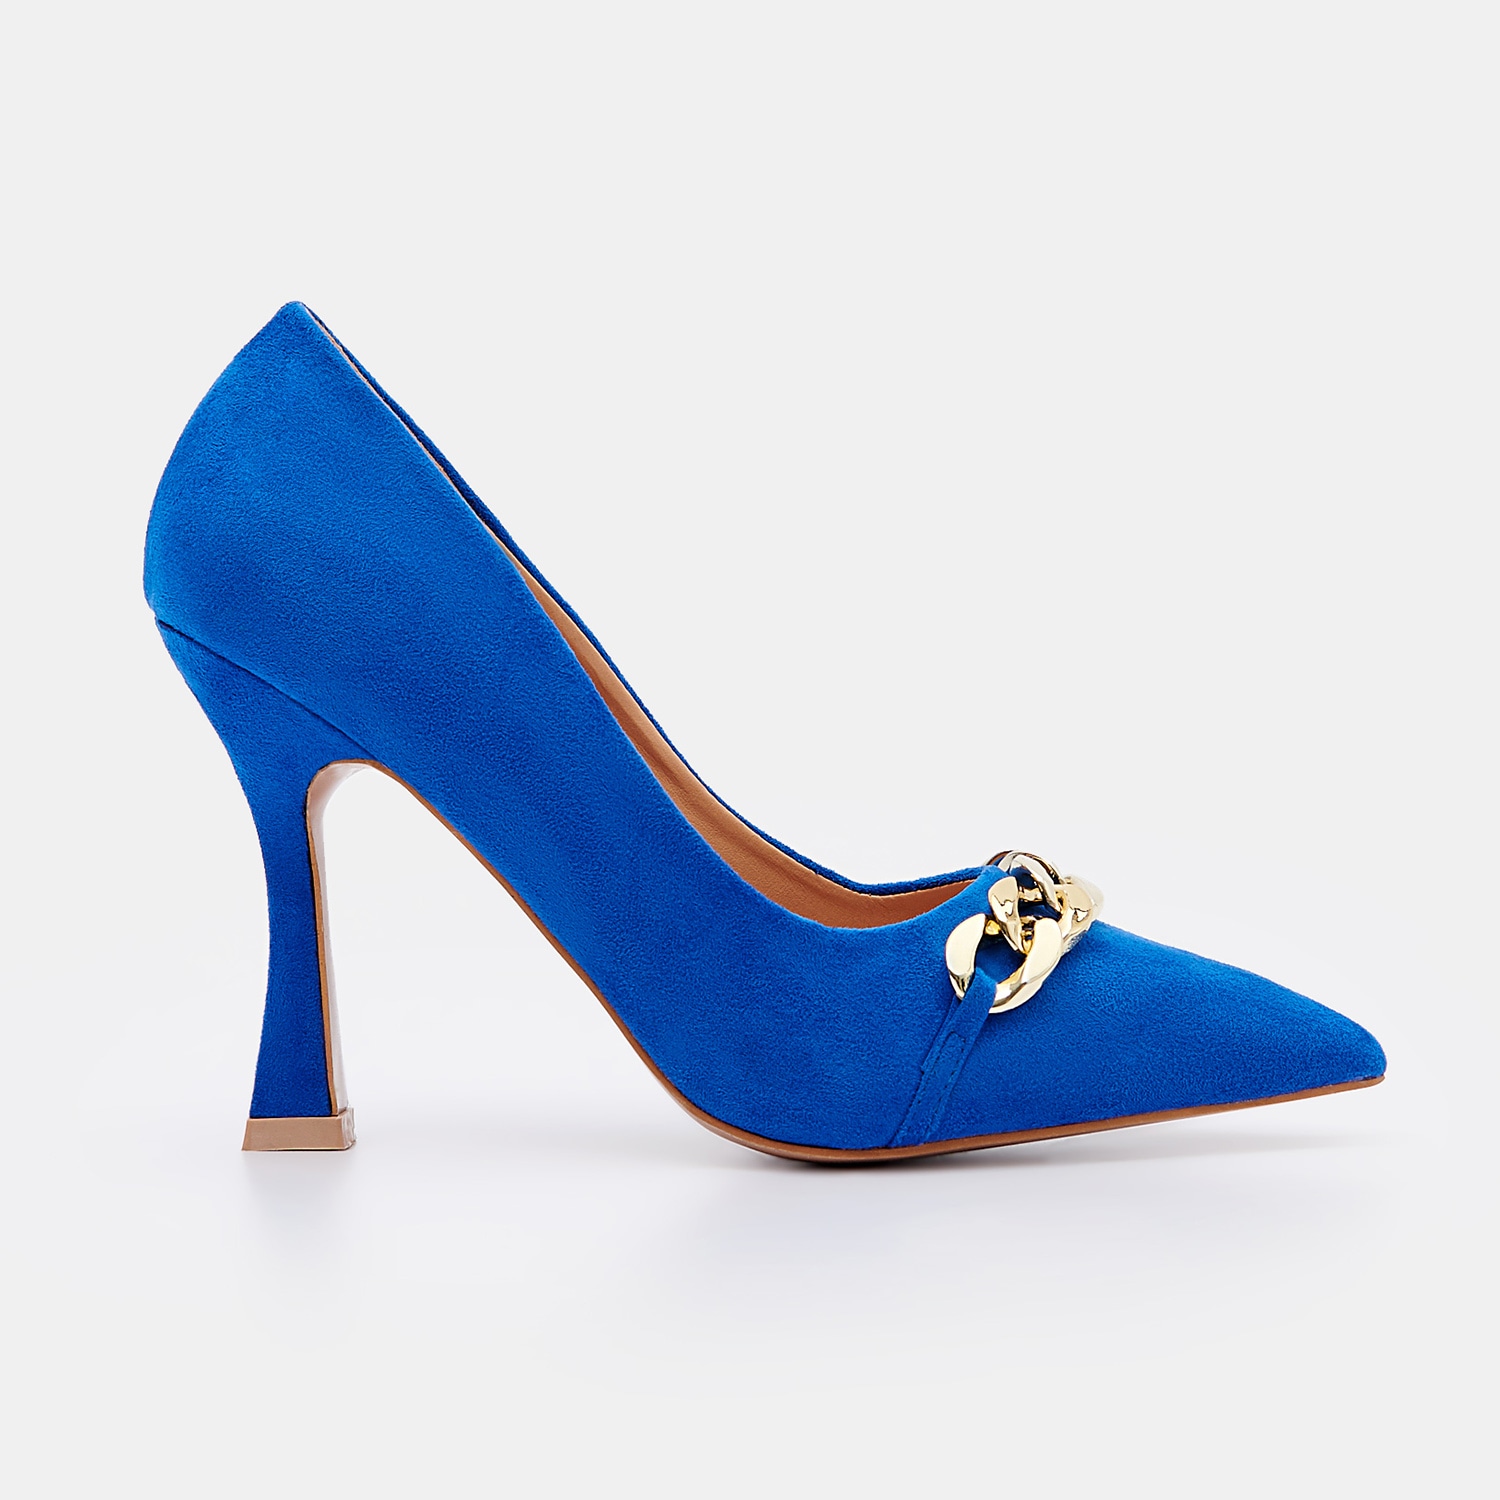 Mohito - Pantofi cu ornament decorativ - Bleumarin image0